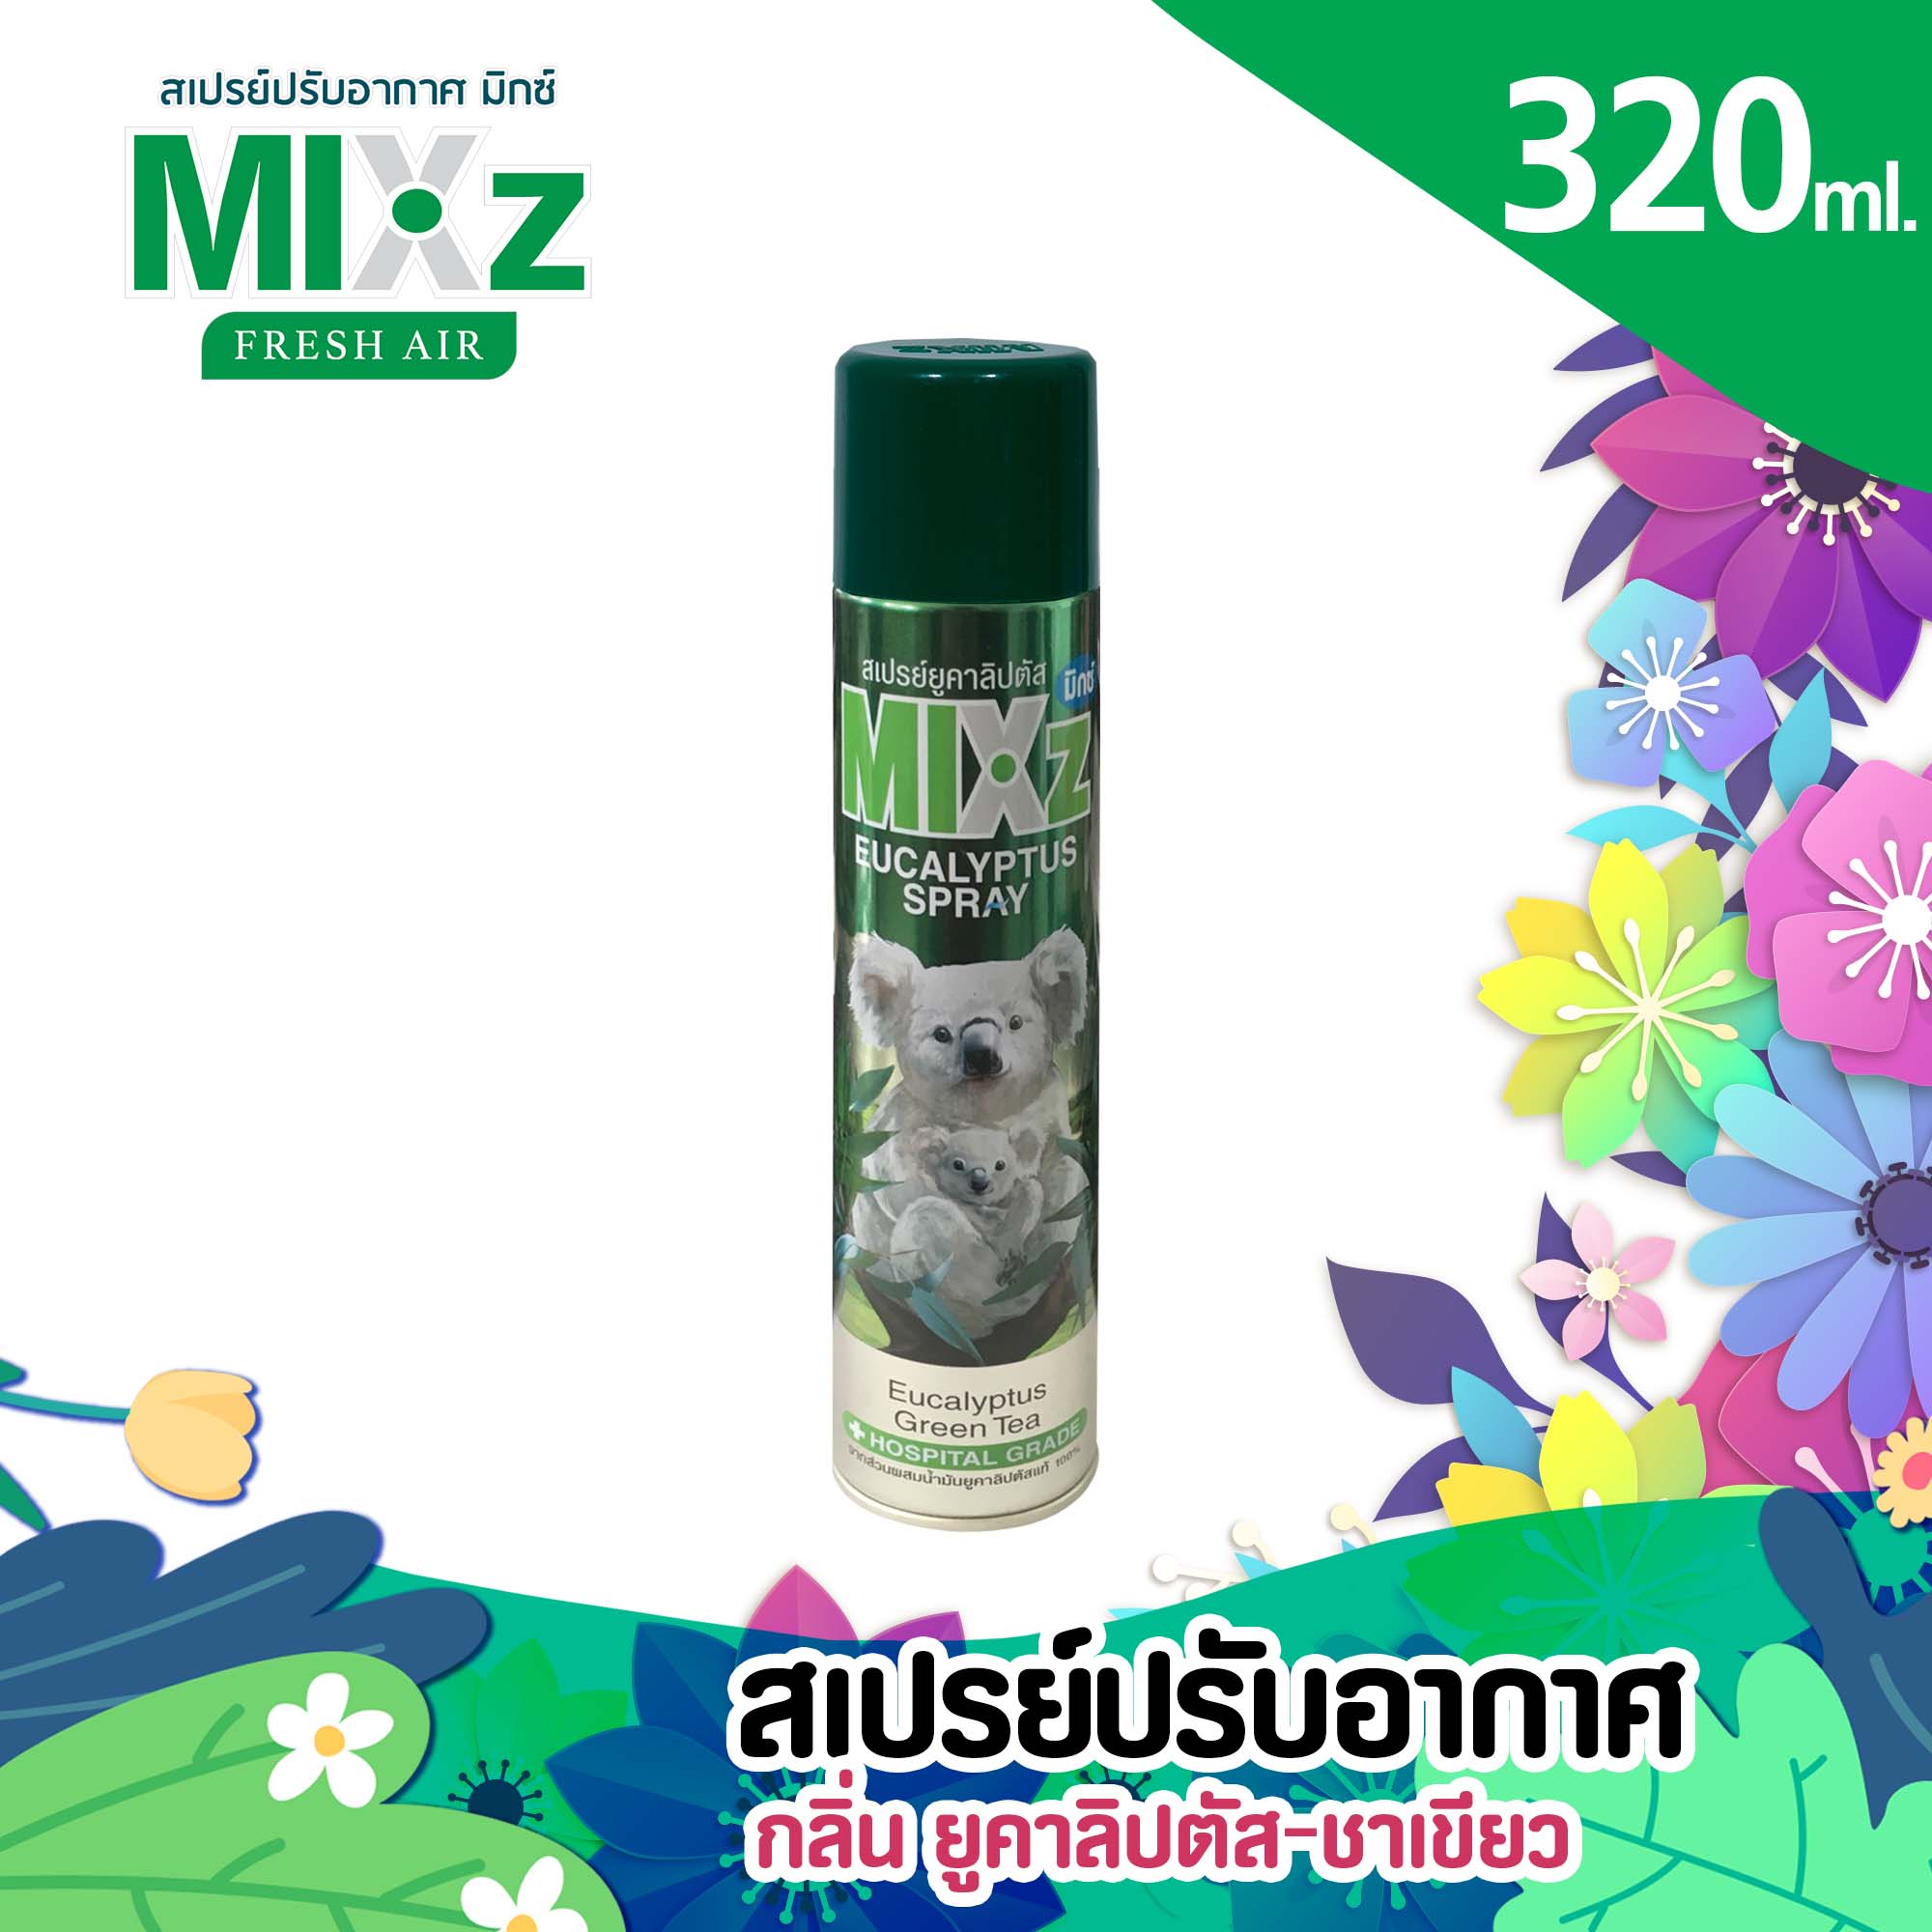 Mixz EUCALYPTUS SPRAY สเปรย์ยูคาลิปตัส - ชาเขียว 320 ml.